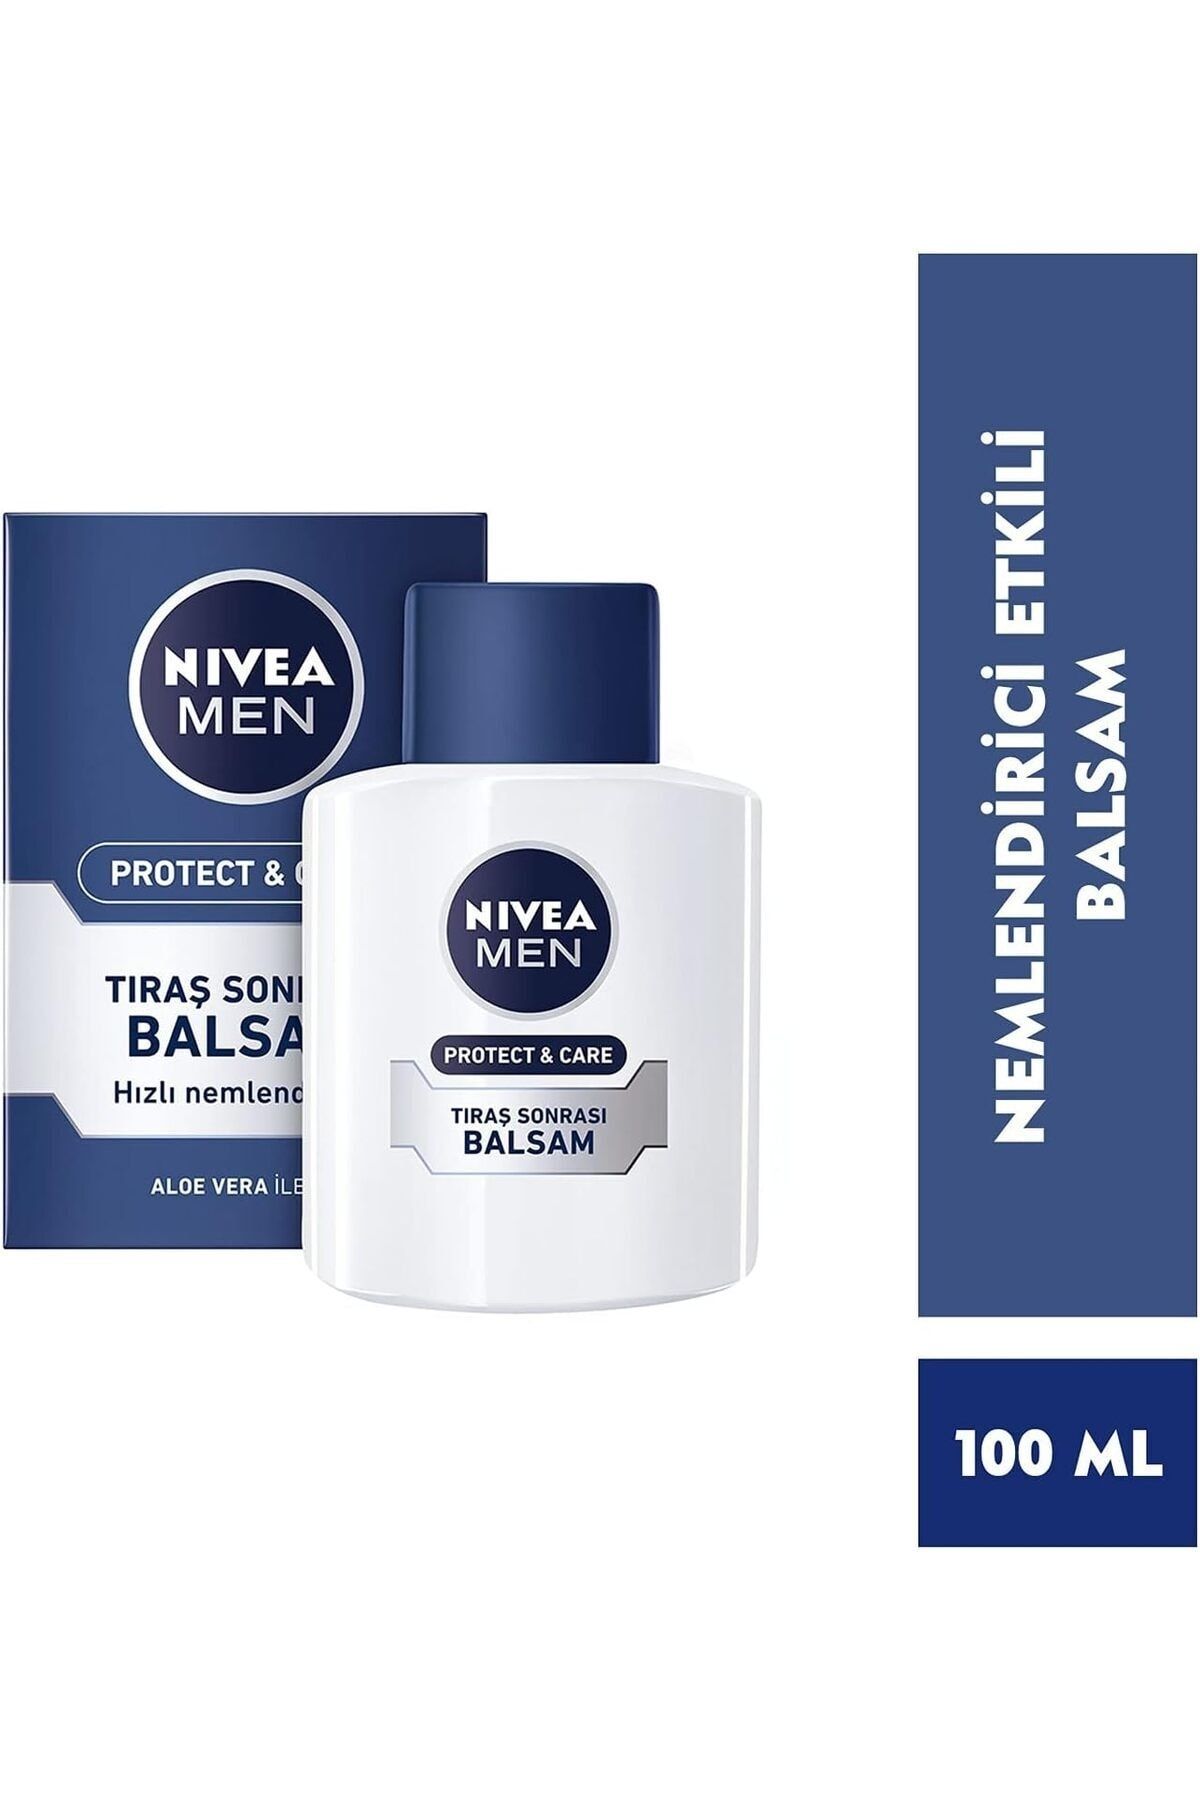 NIVEA مرطوب کننده پس از اصلاح مردانه با مواد مغذی و ضد حساسیت